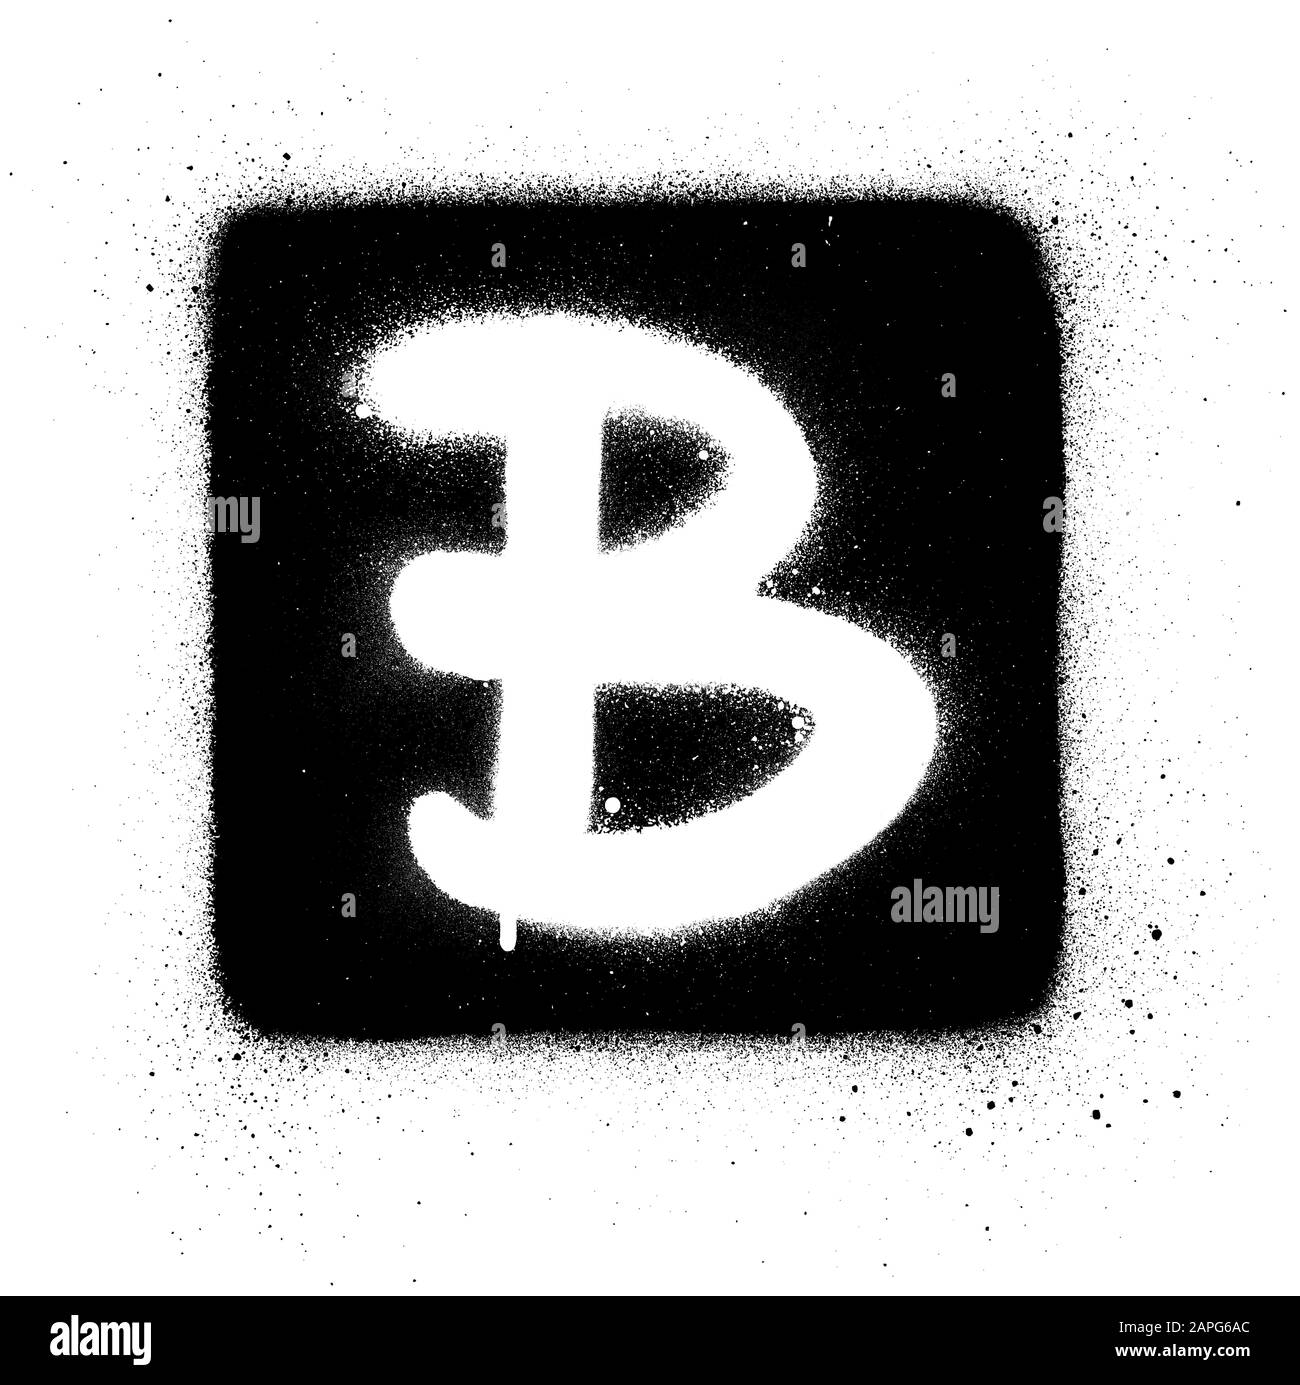 Graffiti B Font Sprayed In White Over Black Square Stock Vector Image Art Alamy